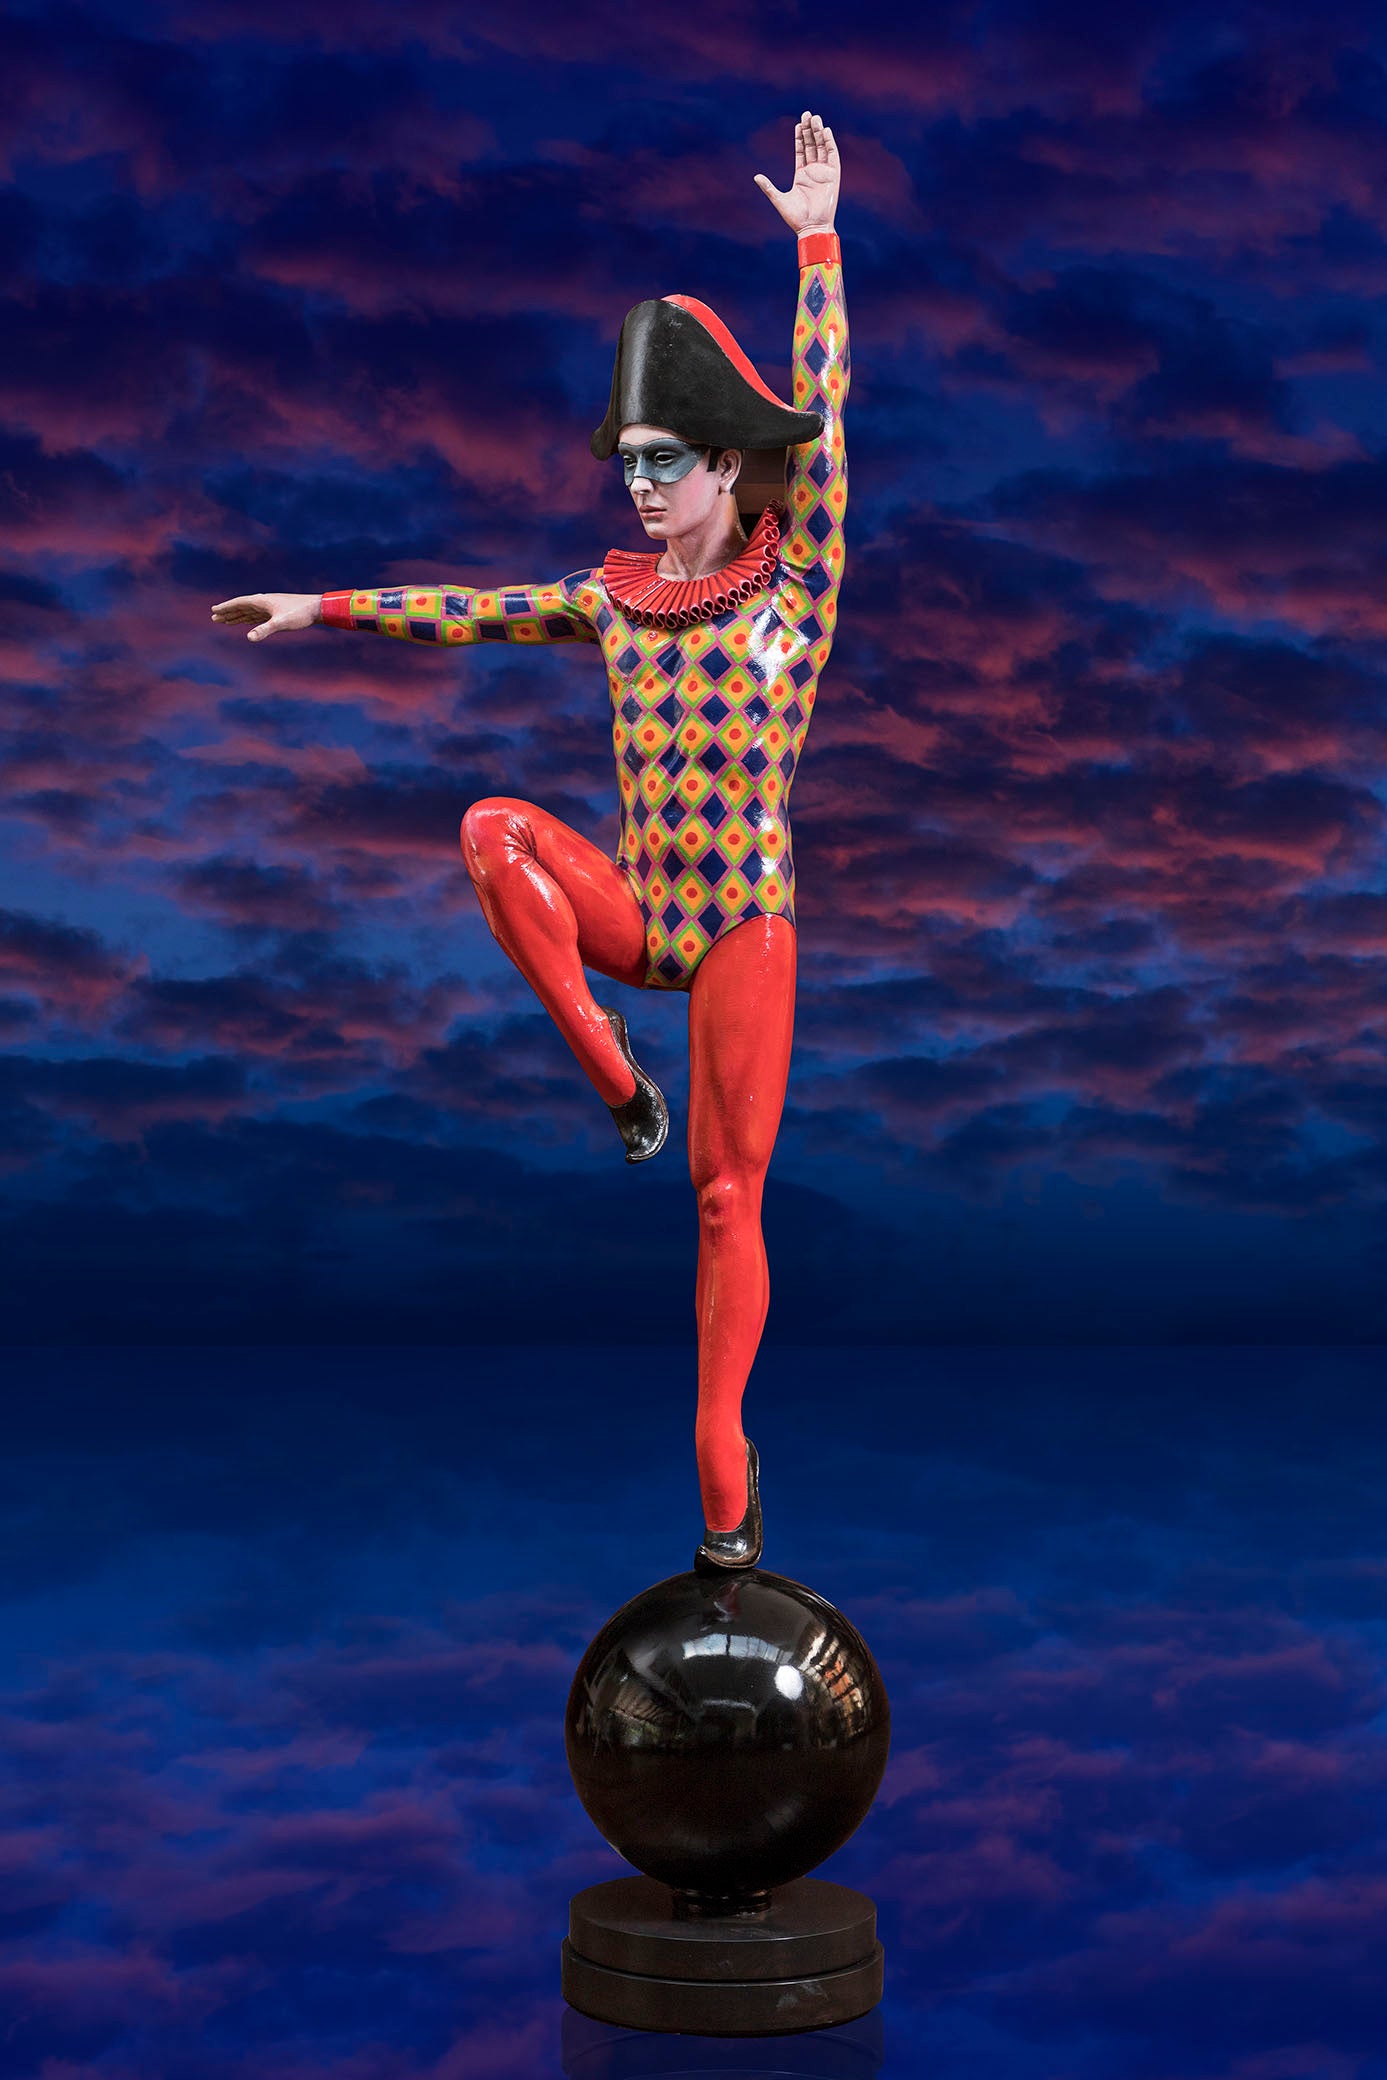 Harlequin Tightrope Walker On Sphere